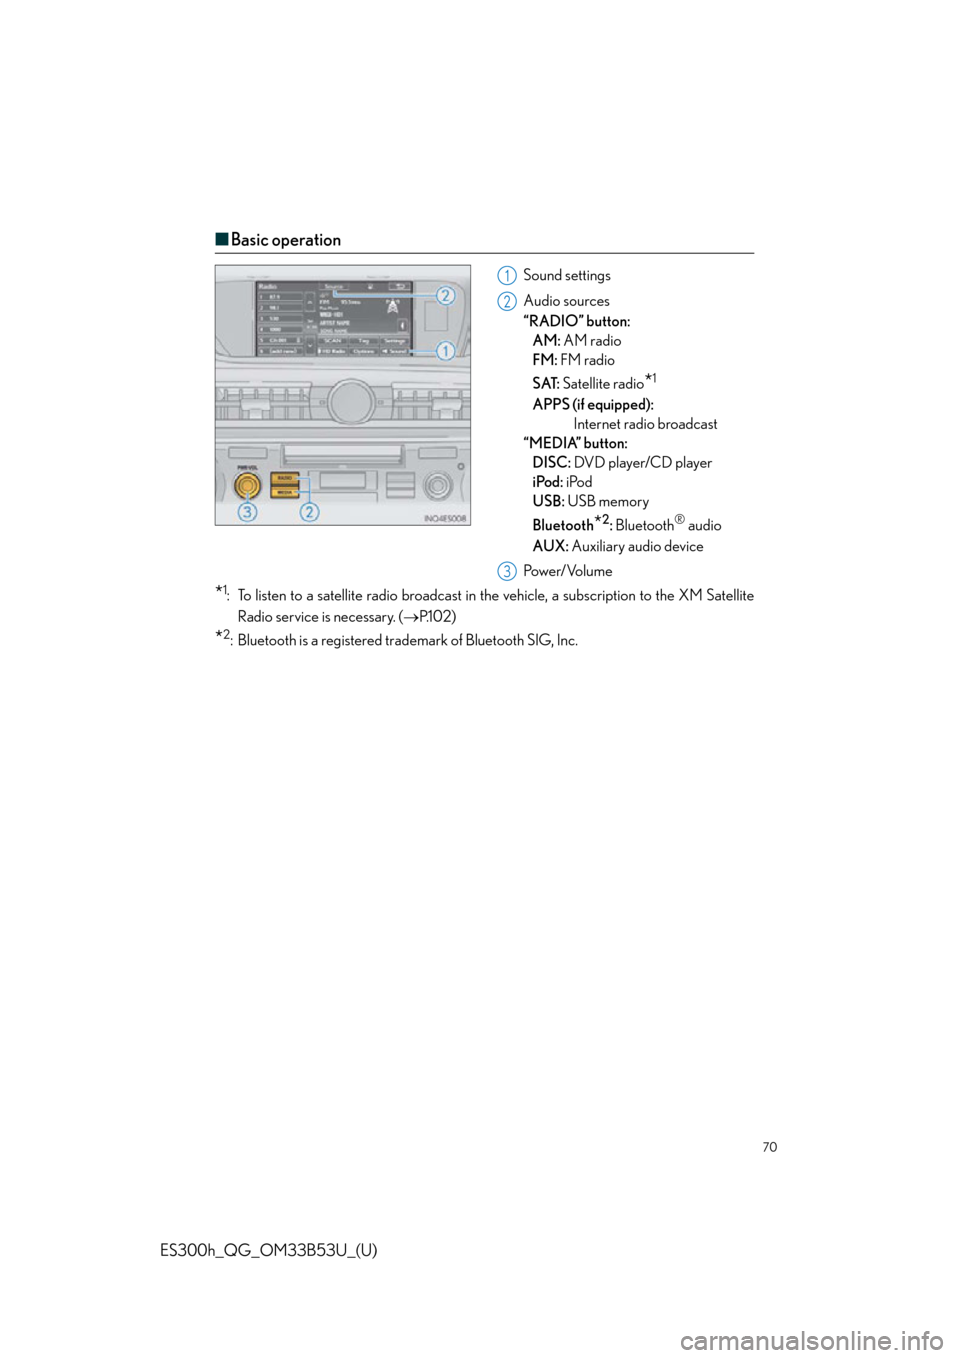 Lexus ES300h 2015  Specifications / Owners Manual Quick Guide (OM33B53U) 70
ES300h_QG_OM33B53U_(U)
■Basic operation
Sound settings
Audio sources
“RADIO” button: 
AM:  AM radio
FM:  FM radio
SAT:  Satellite radio
*1
APPS (if equipped): 
Internet radio broadcast
“MED